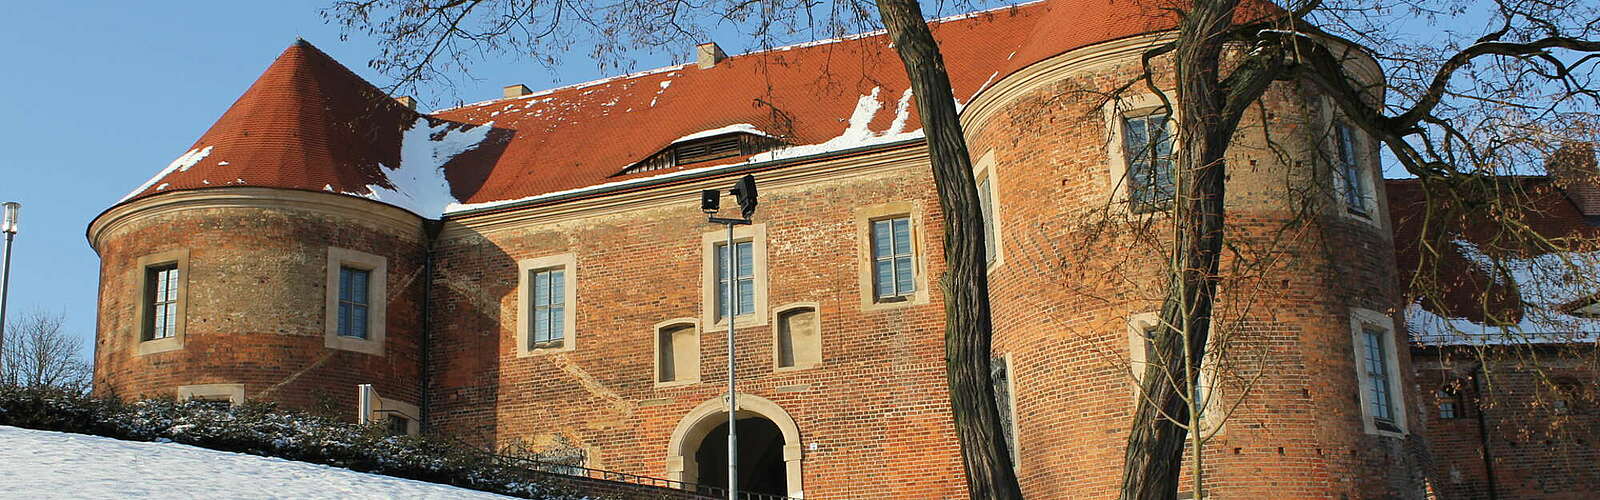 Burg Eisenhardt im Winter,
        
    

        Foto: Tourismusverband Fläming e.V./Heiko Bansen/Juliane Wittig